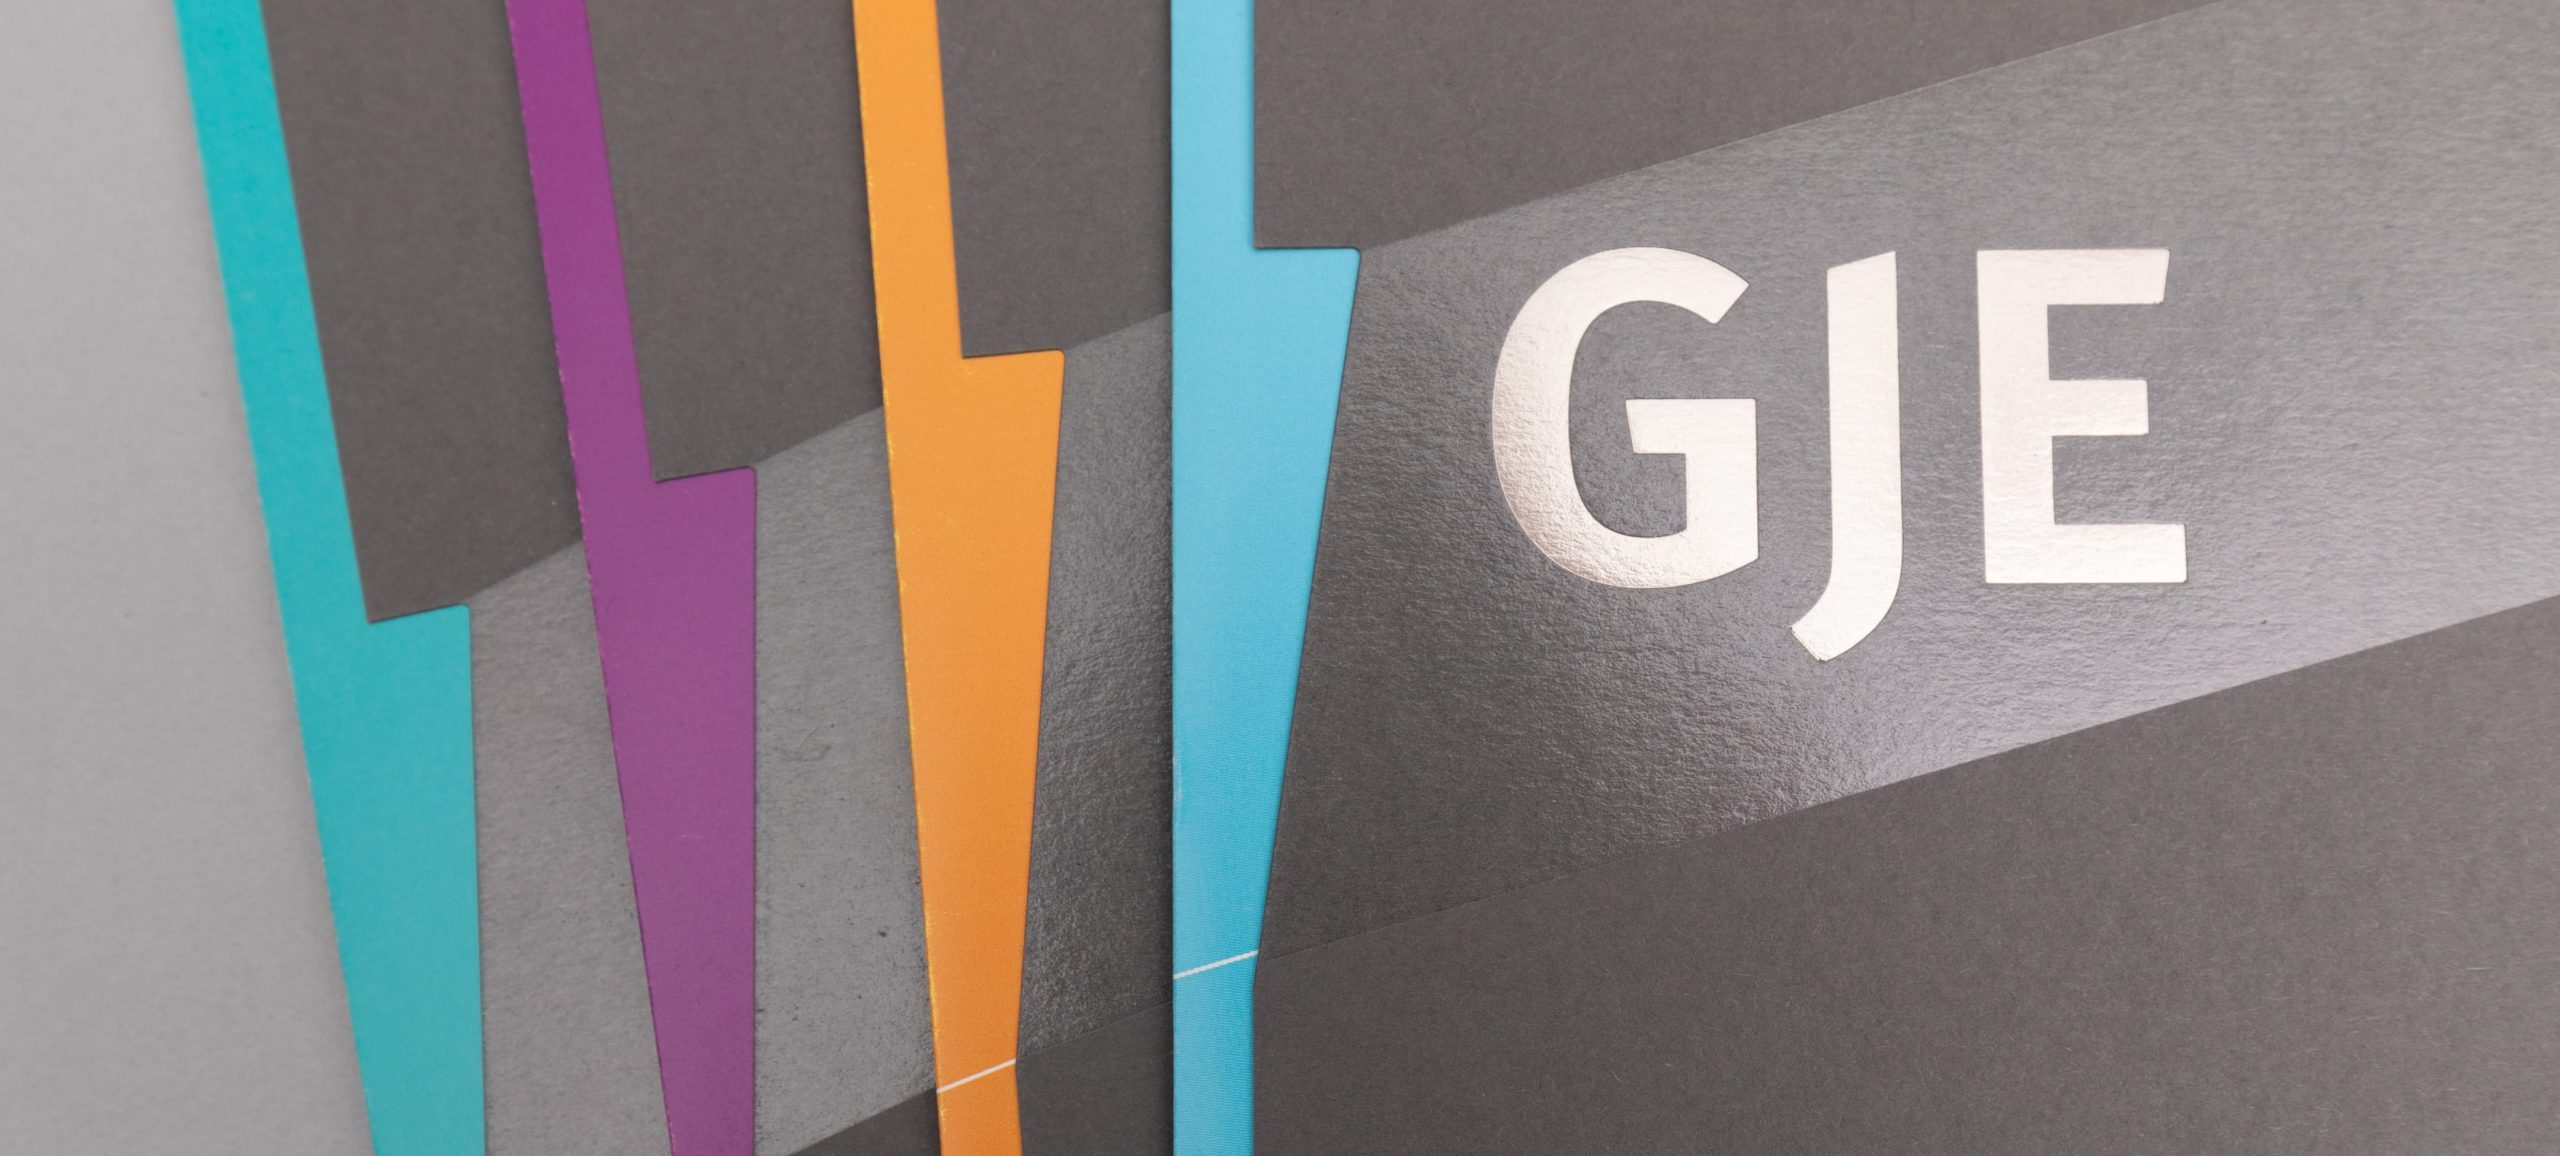 GJE rebranded covers, close up